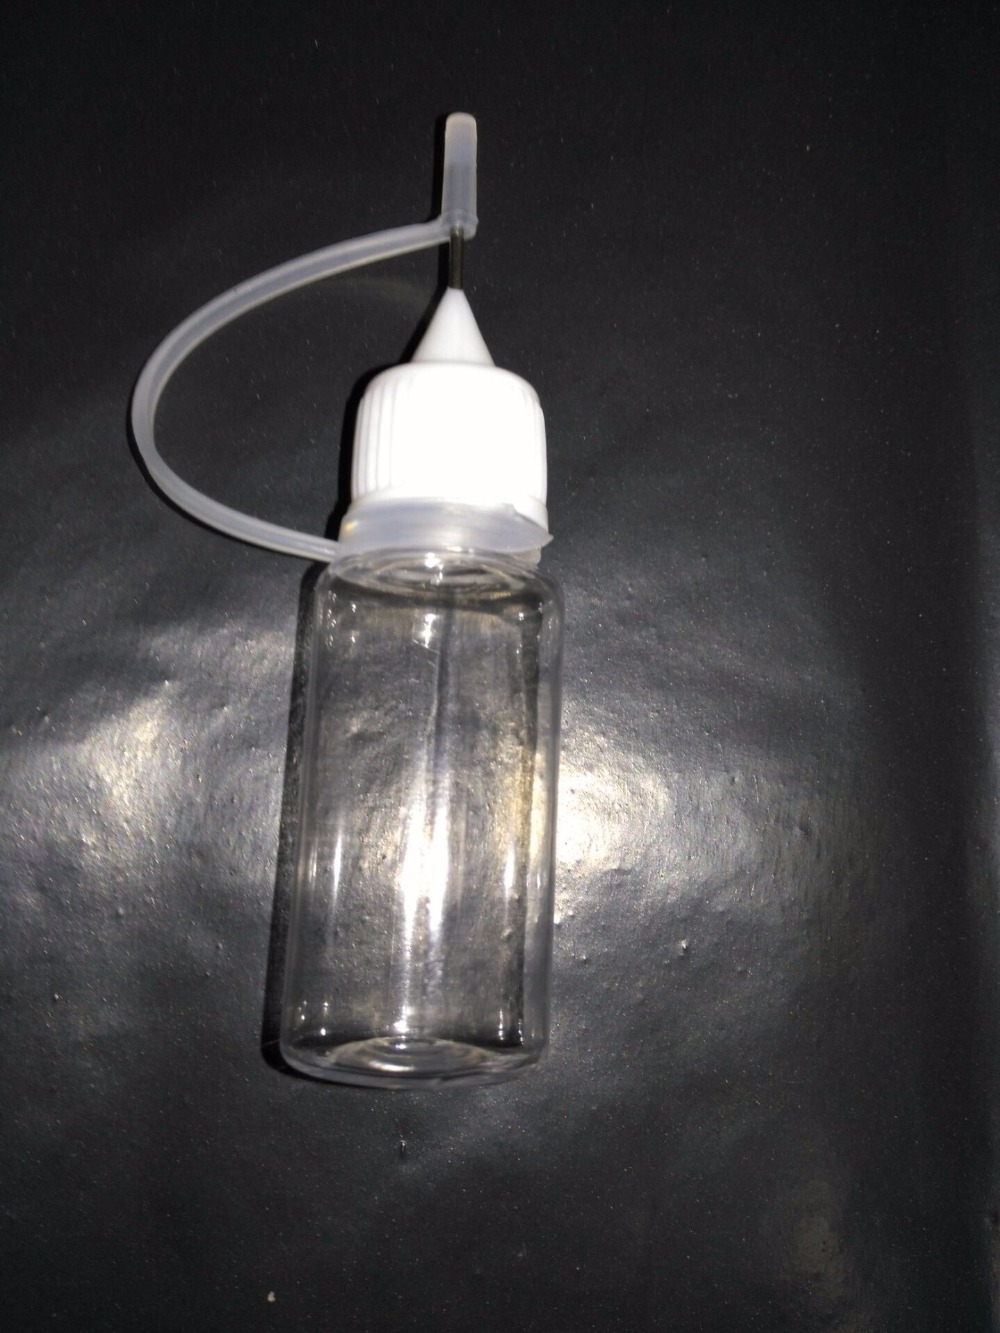 Wholesale China Supplier ! 200pcs 10ML Empty Dropper Plastic Bottles Needle Tip Squeezable LDPE, UYER76763